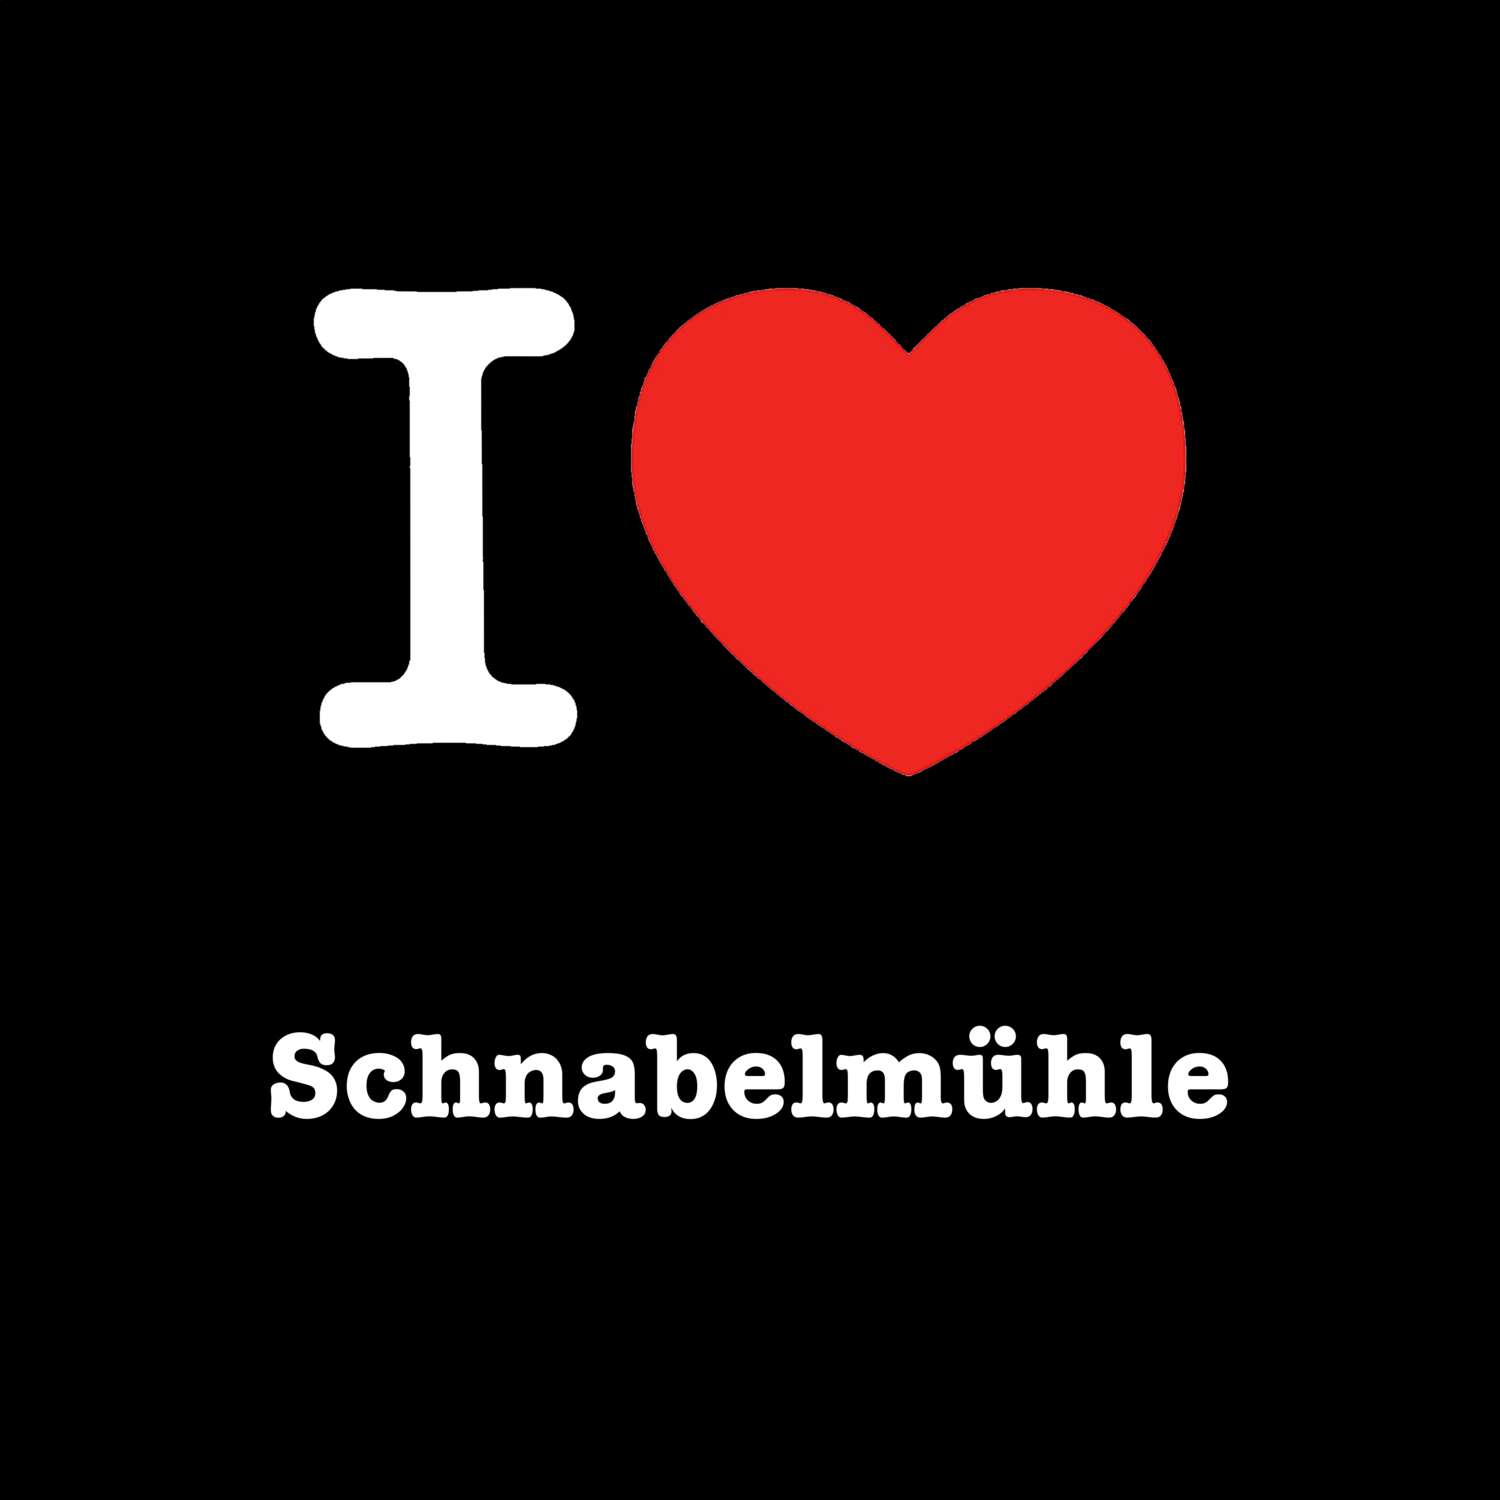 Schnabelmühle T-Shirt »I love«